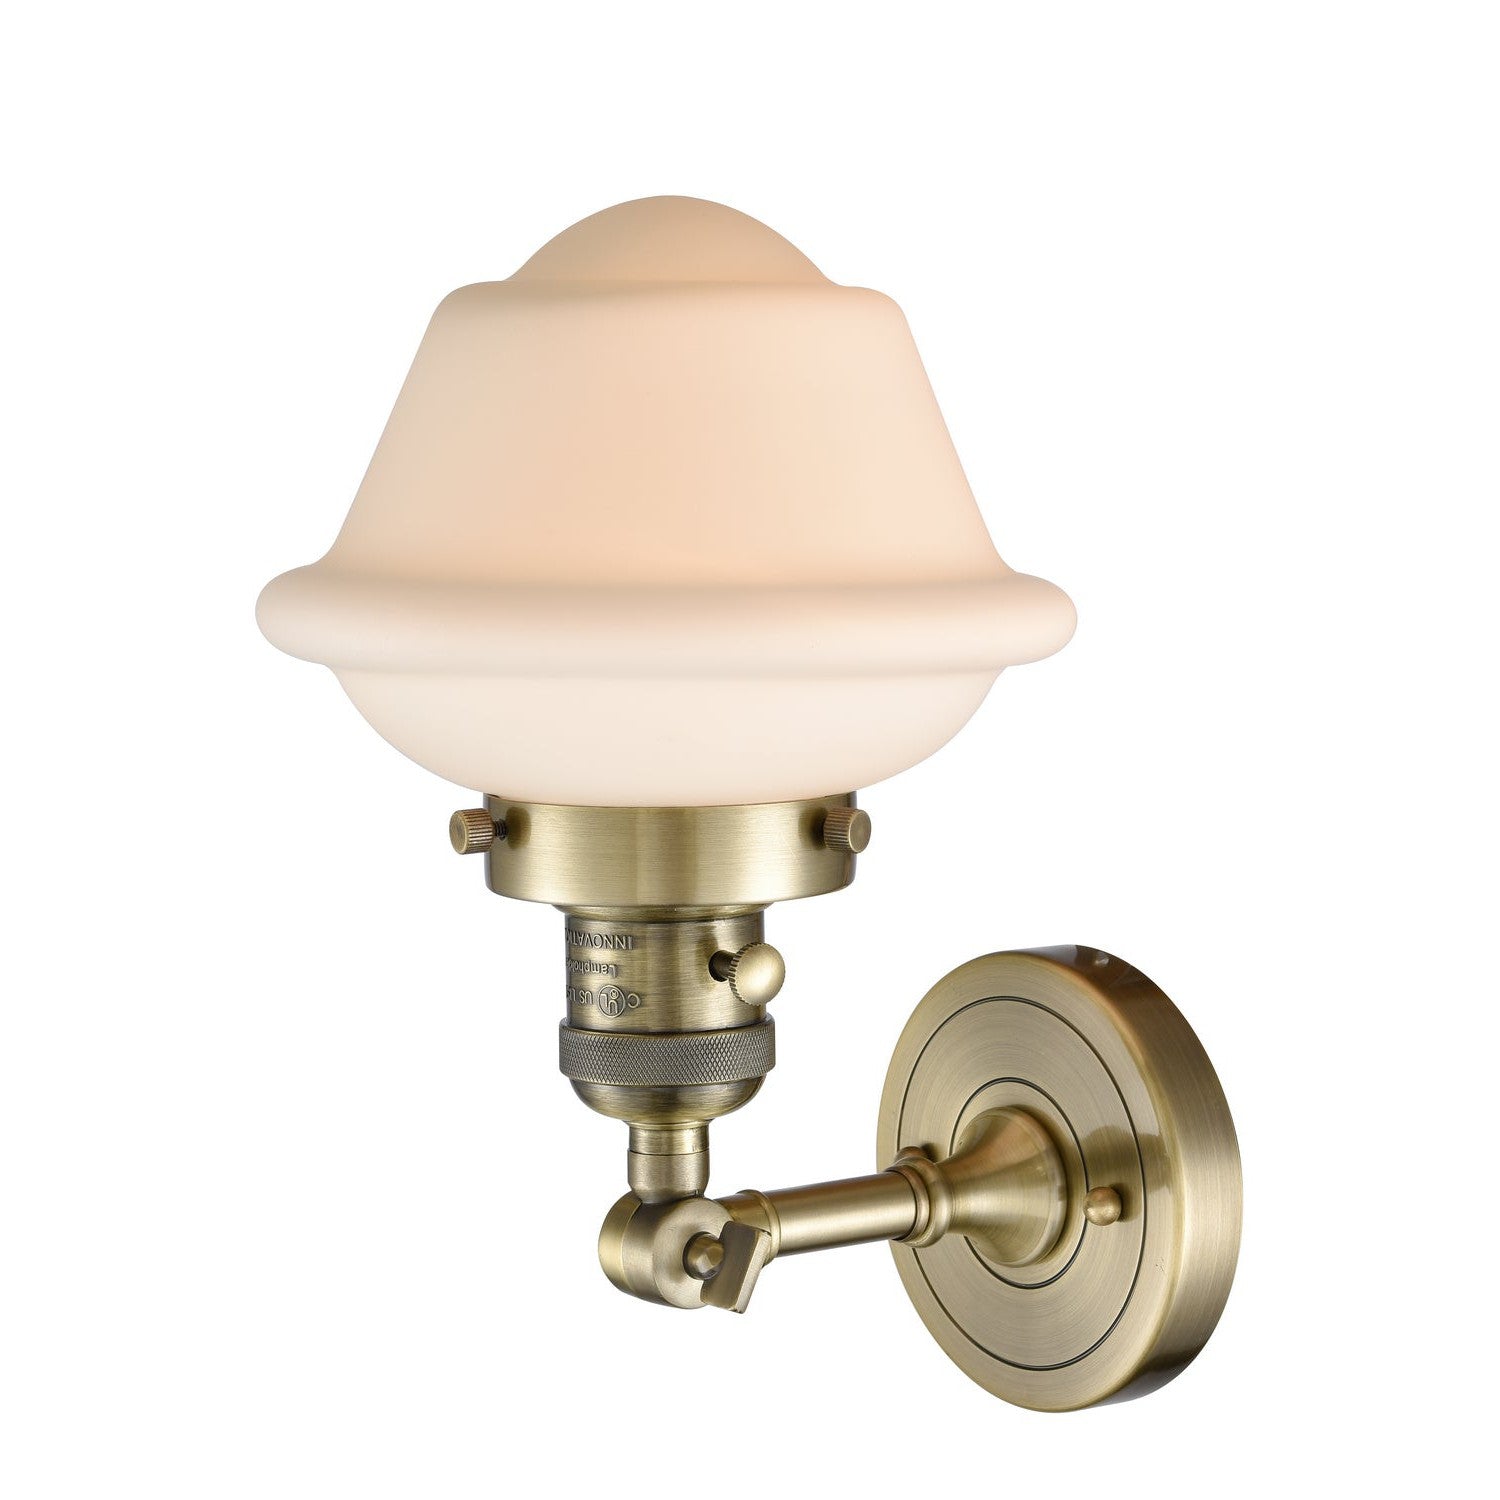 Innovations Franklin Restoration 203SW-AB-G531-LED Wall Sconce Light - Antique Brass